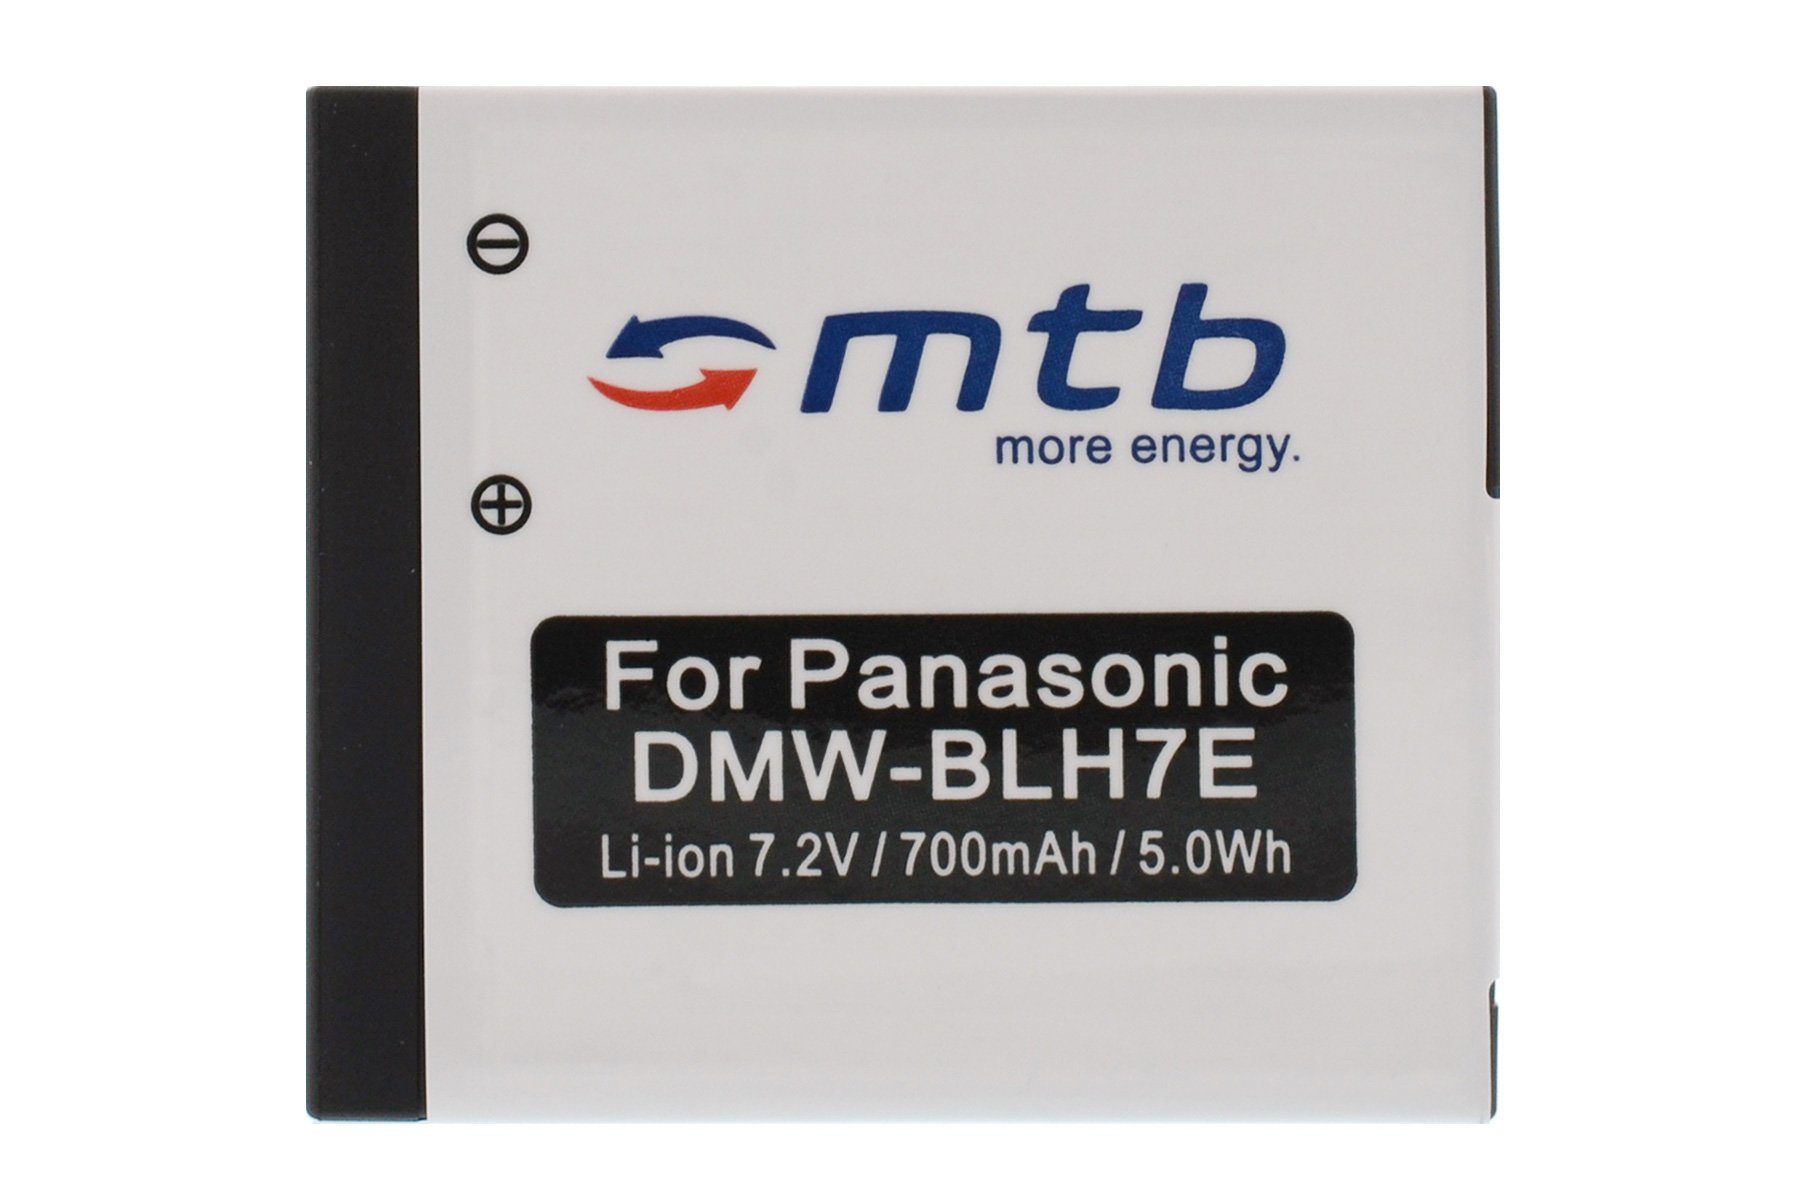 mtb more energy DMC-GF7… Kamera-Akku - V), Akku-Typ mAh für: Lumix passend kompatibel DMW-BLH7 (7,2 Panasonic 700 Panasonic [BAT-409 mit Li-Ion